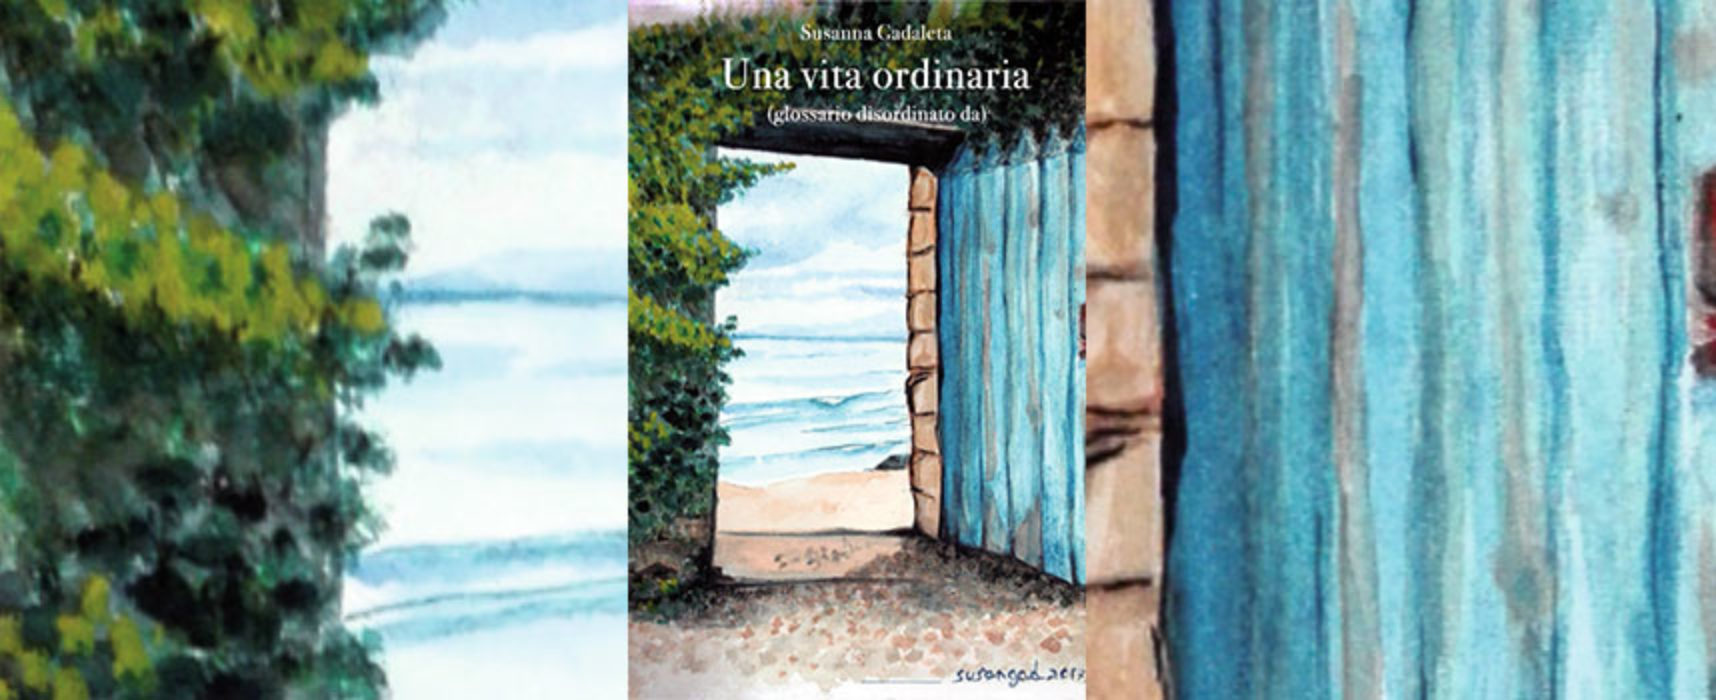 “Una vita ordinaria”: romanzo d’esordio per Susanna Gadaleta